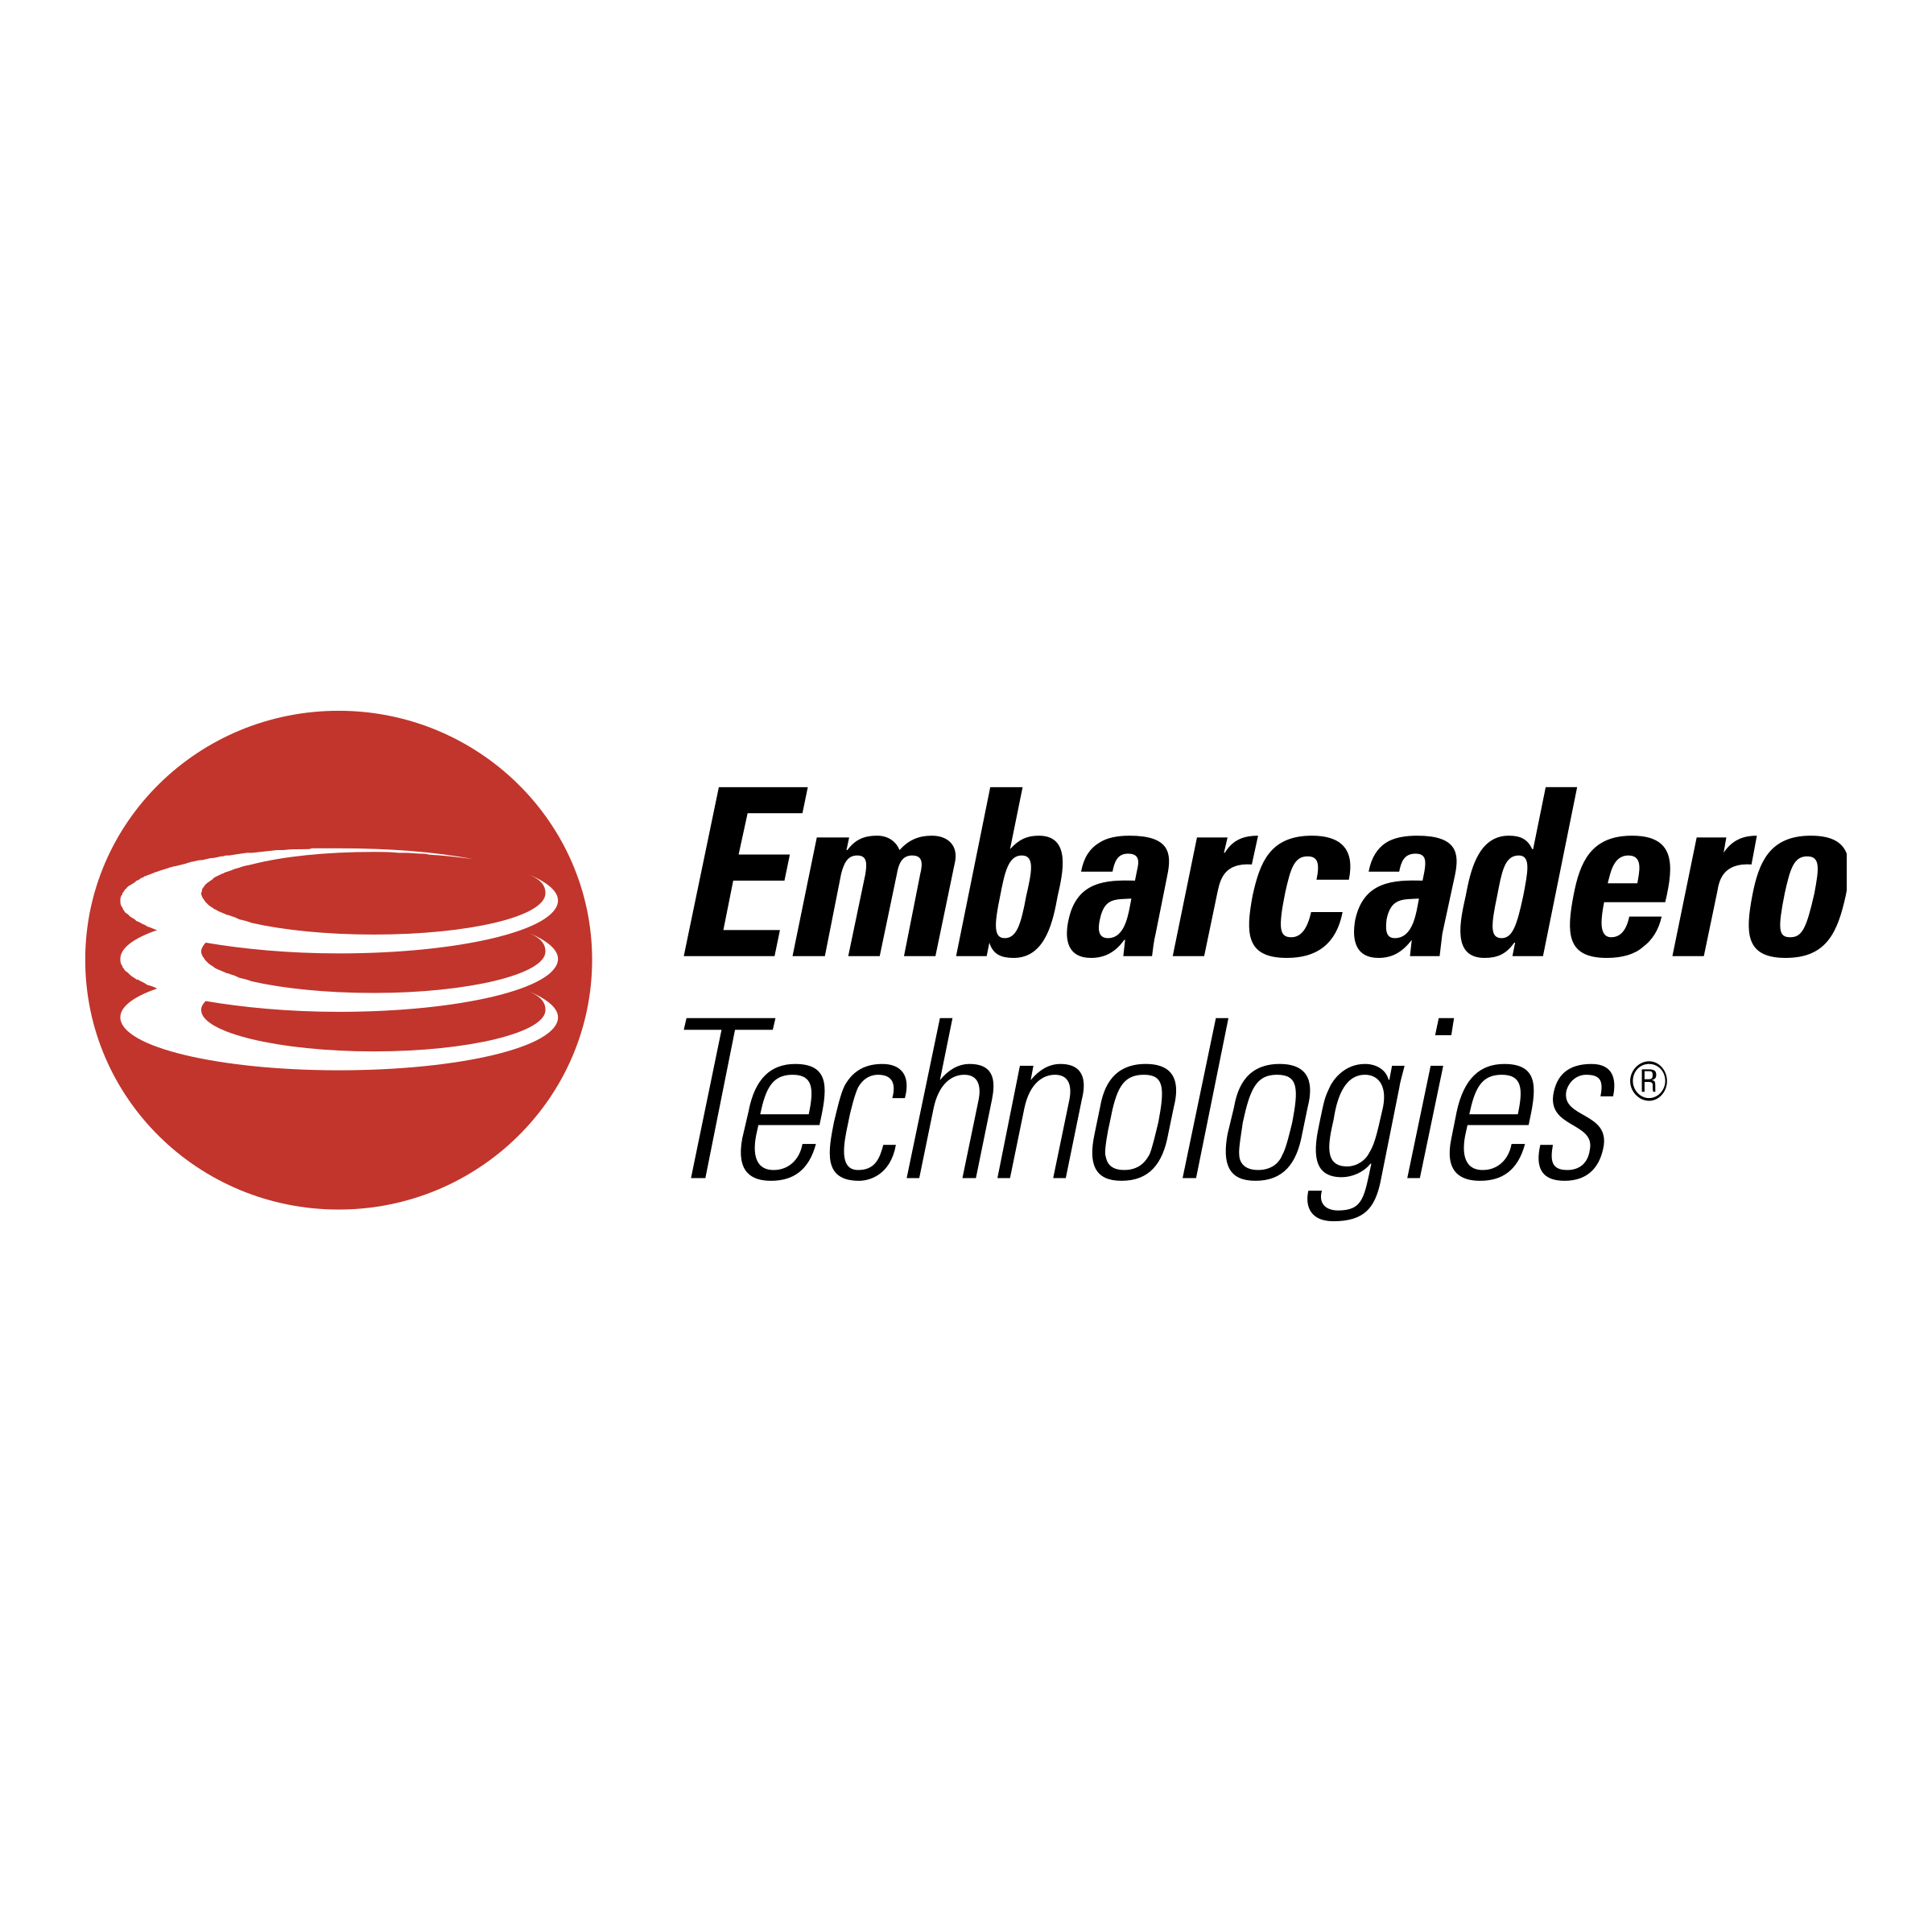 Embarcadero Logo - Embarcadero Technologies Logo PNG Transparent & SVG Vector